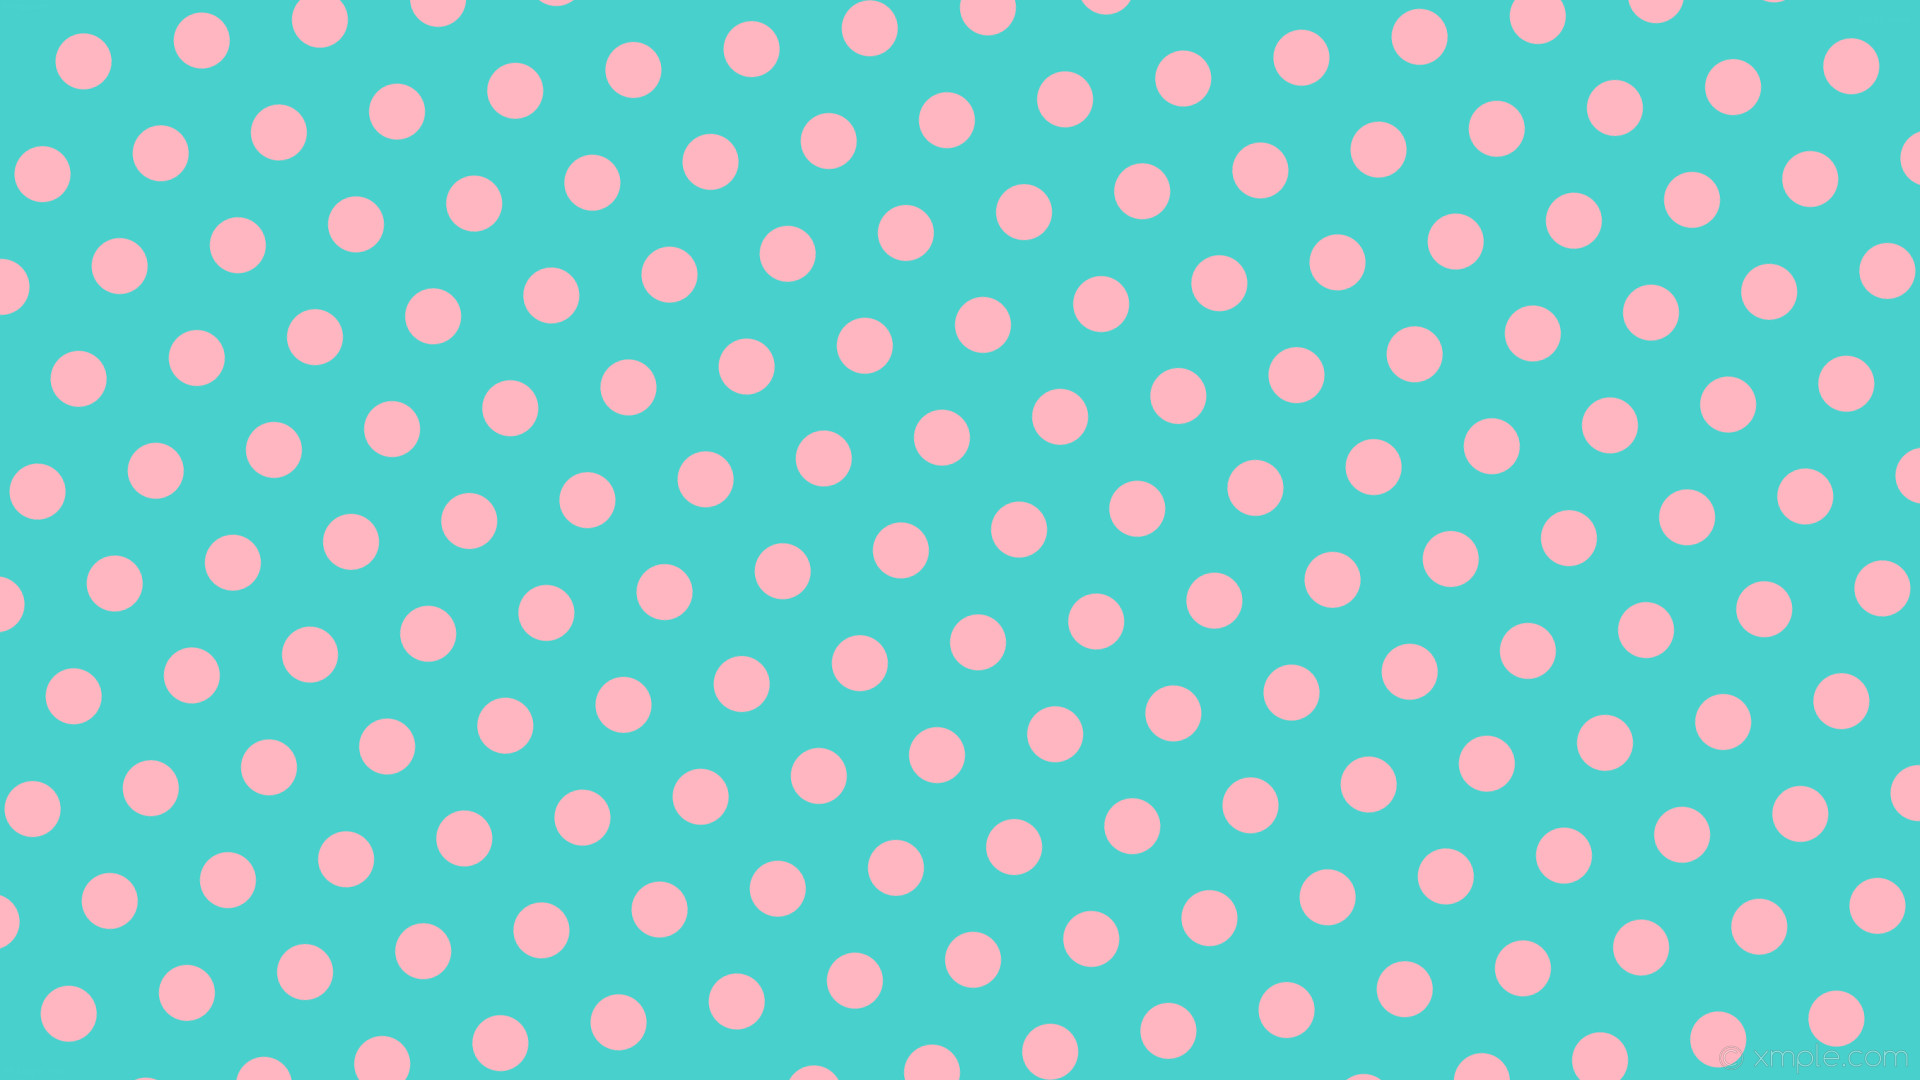 1920x1080 wallpaper polka hexagon pink blue dots medium turquoise light pink #48d1cc  #ffb6c1 diagonal 10